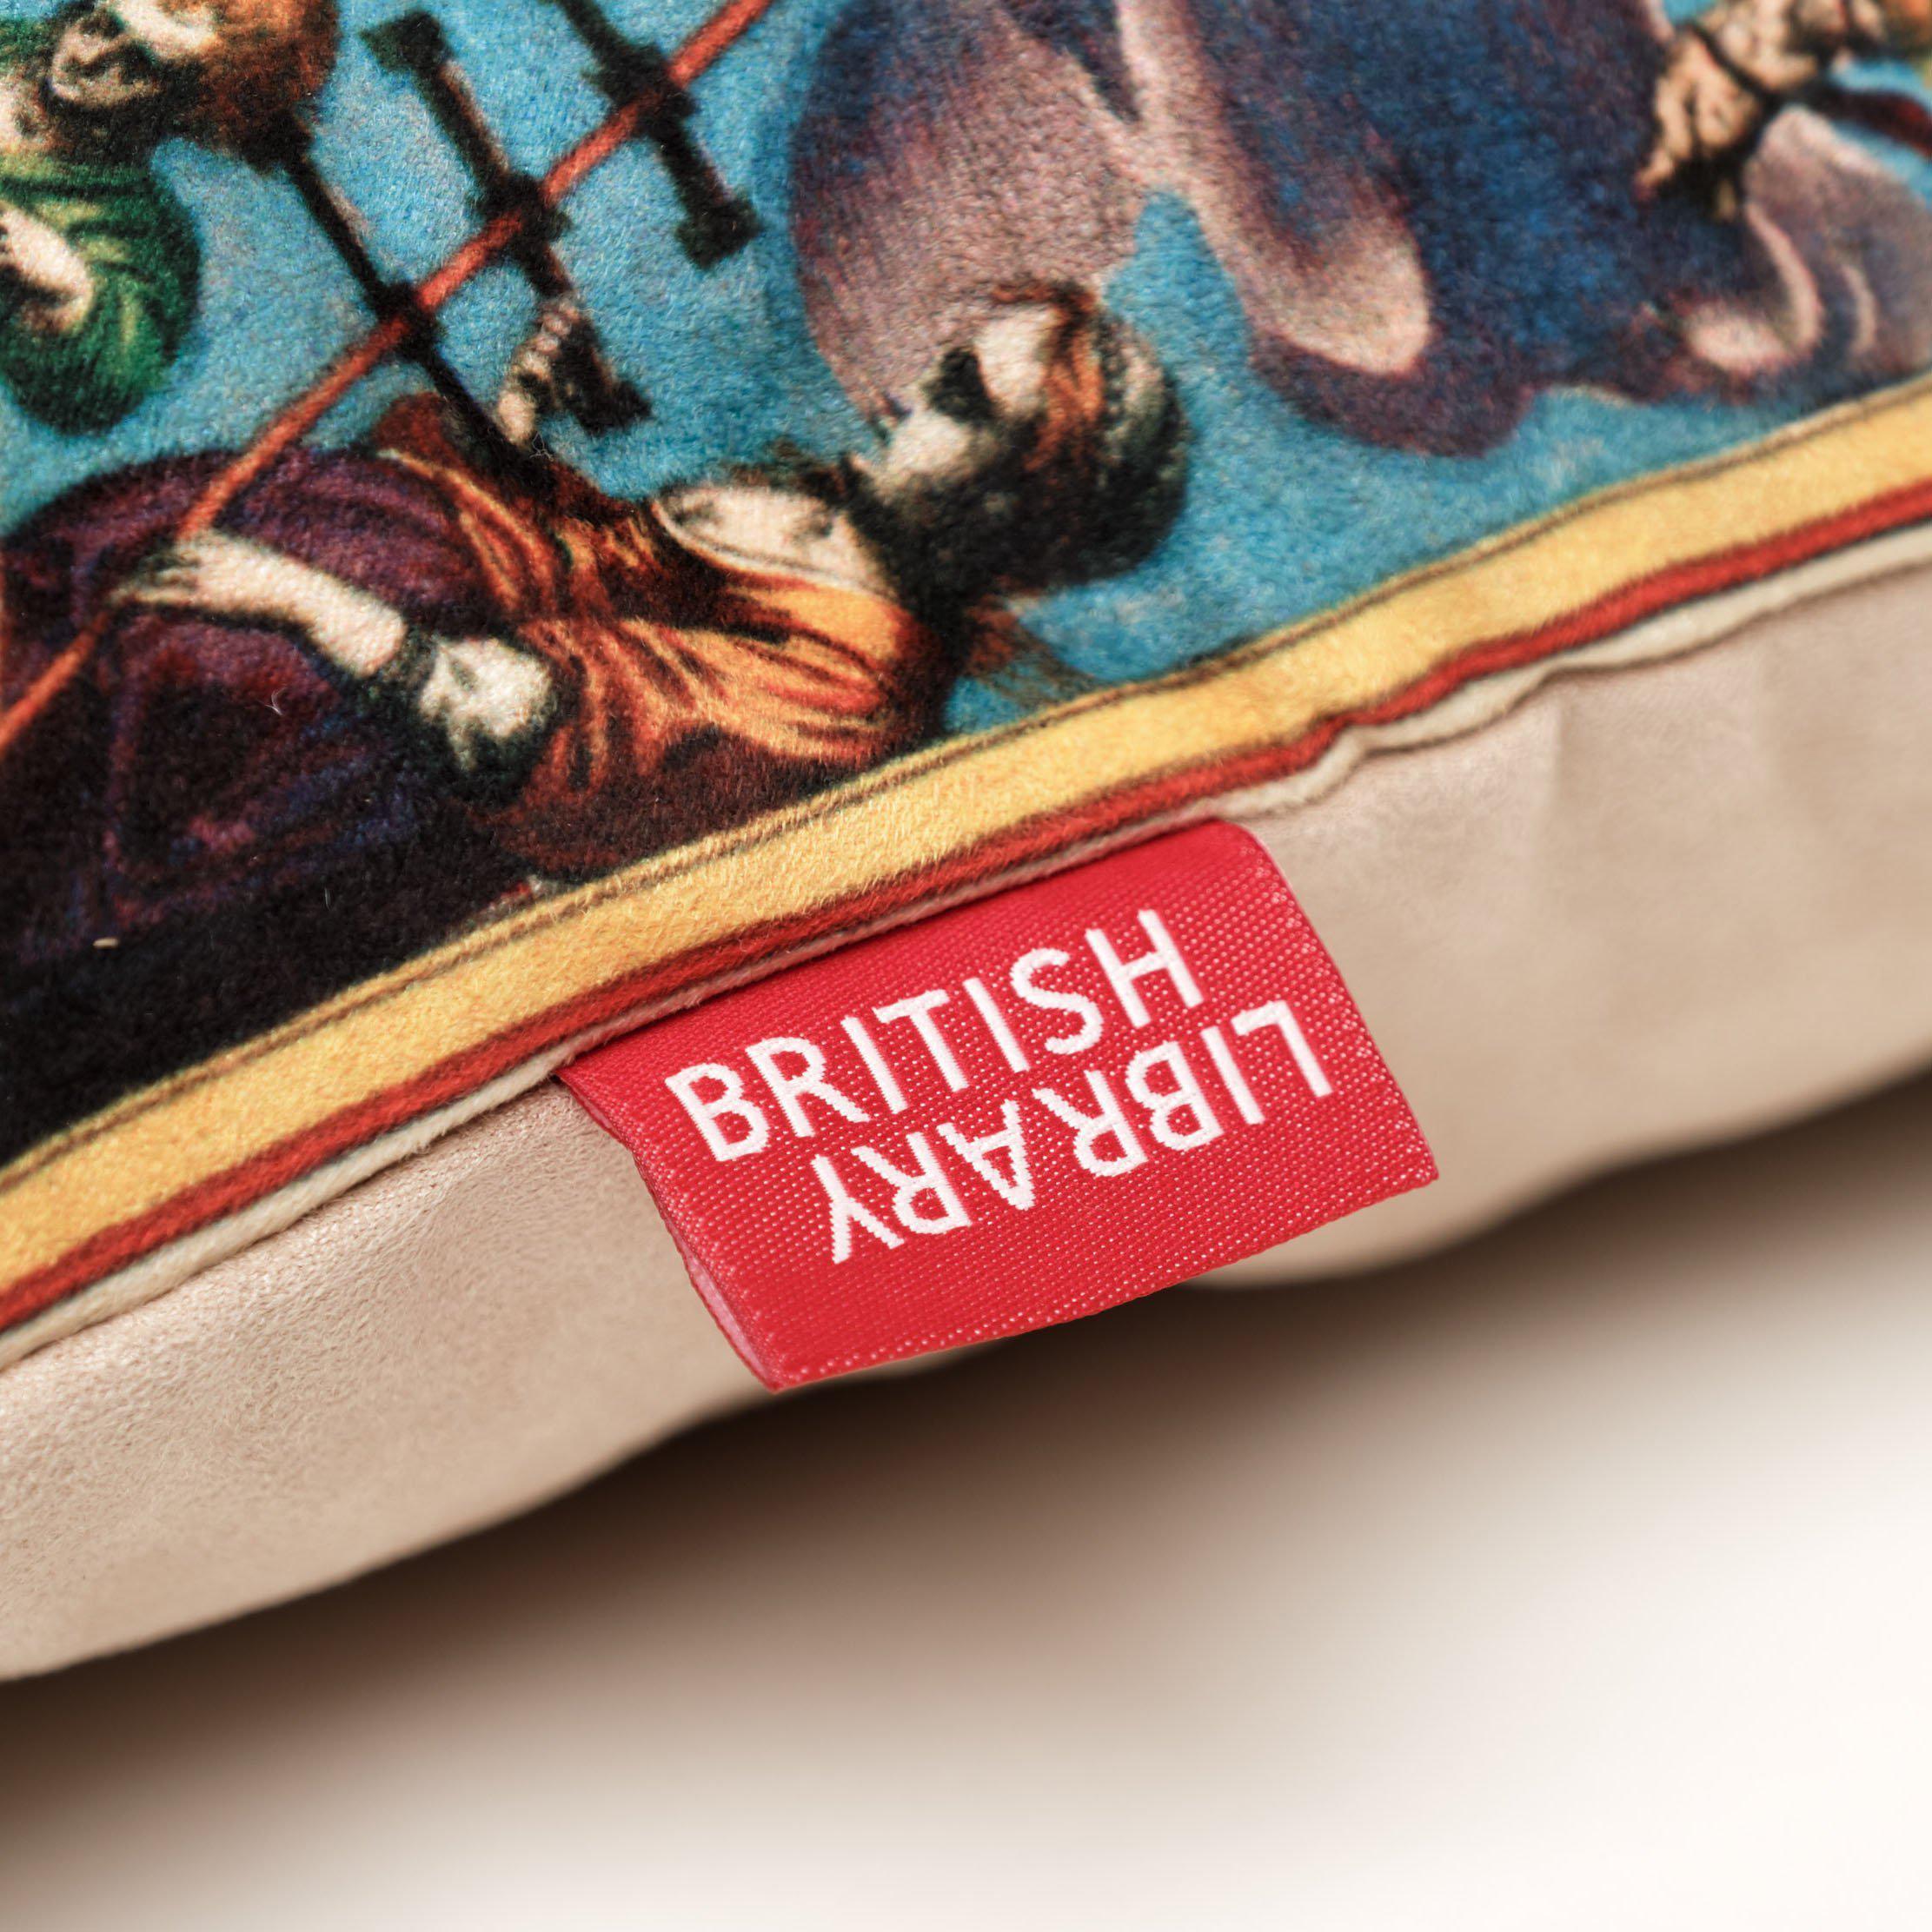 Engraved Map London - British Library Cushions - Handmade Cushions UK - WeLoveCushions